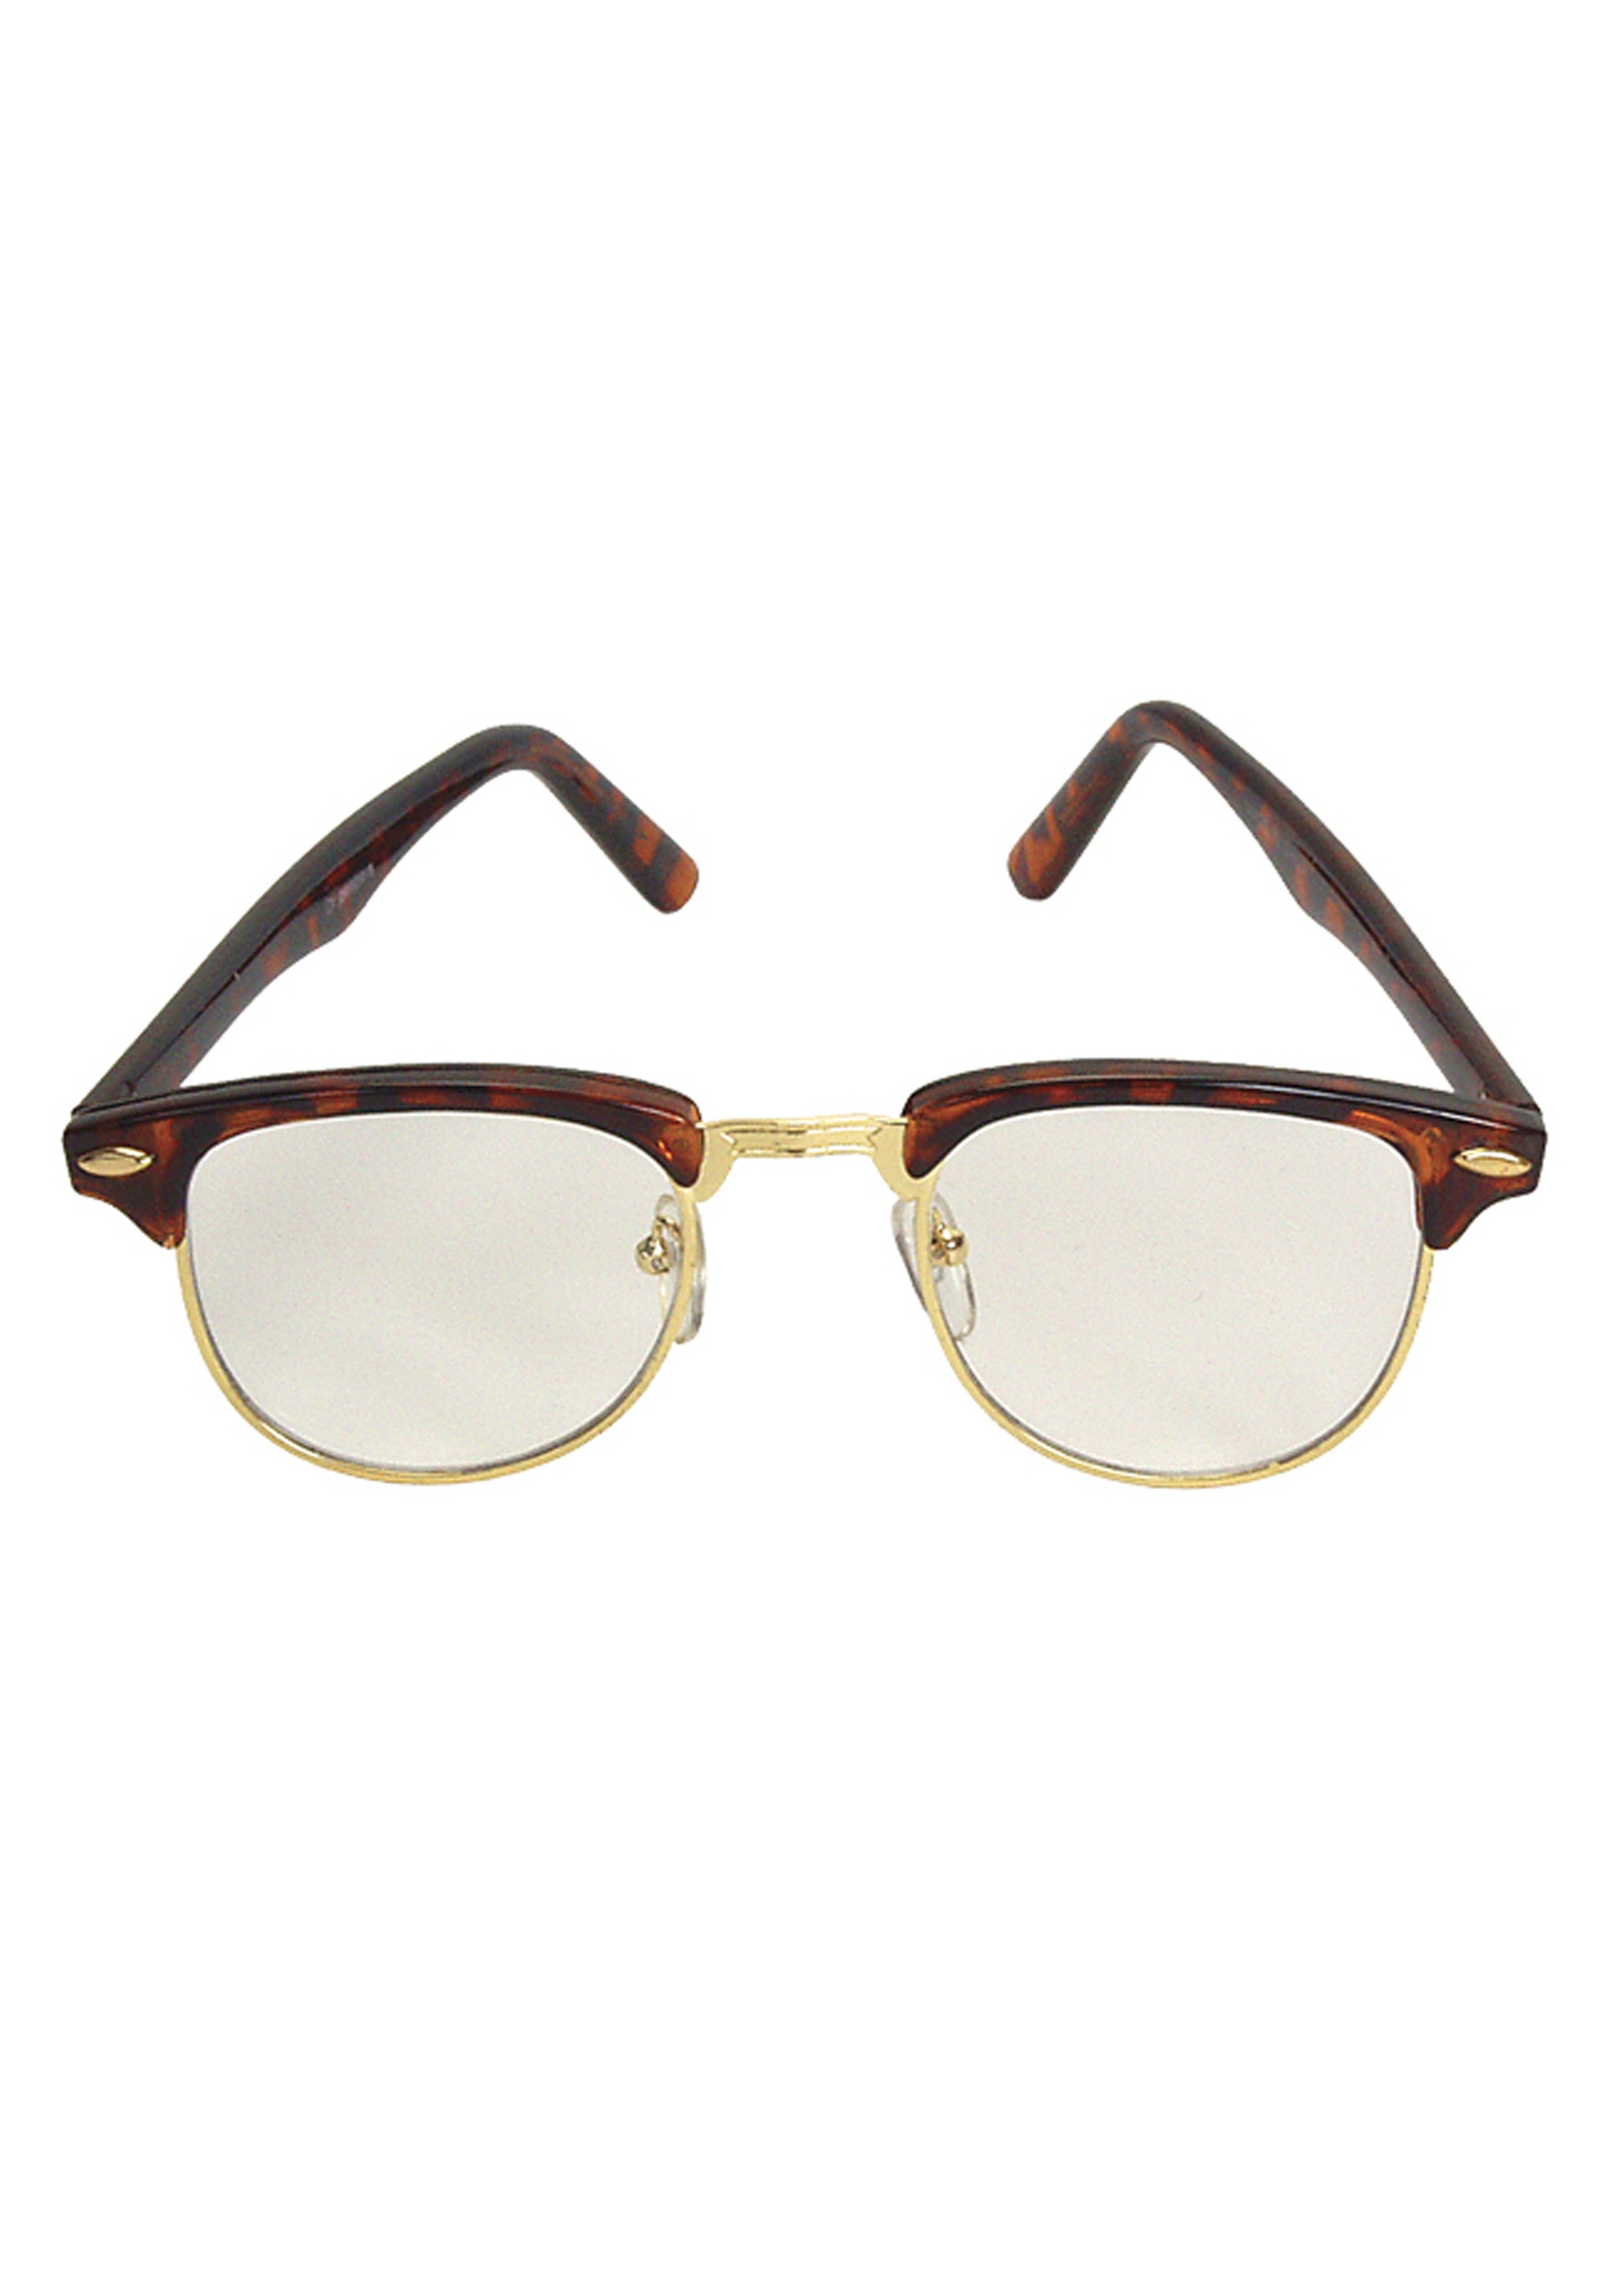 Mr. 50’s Brown Tortoise Glasses